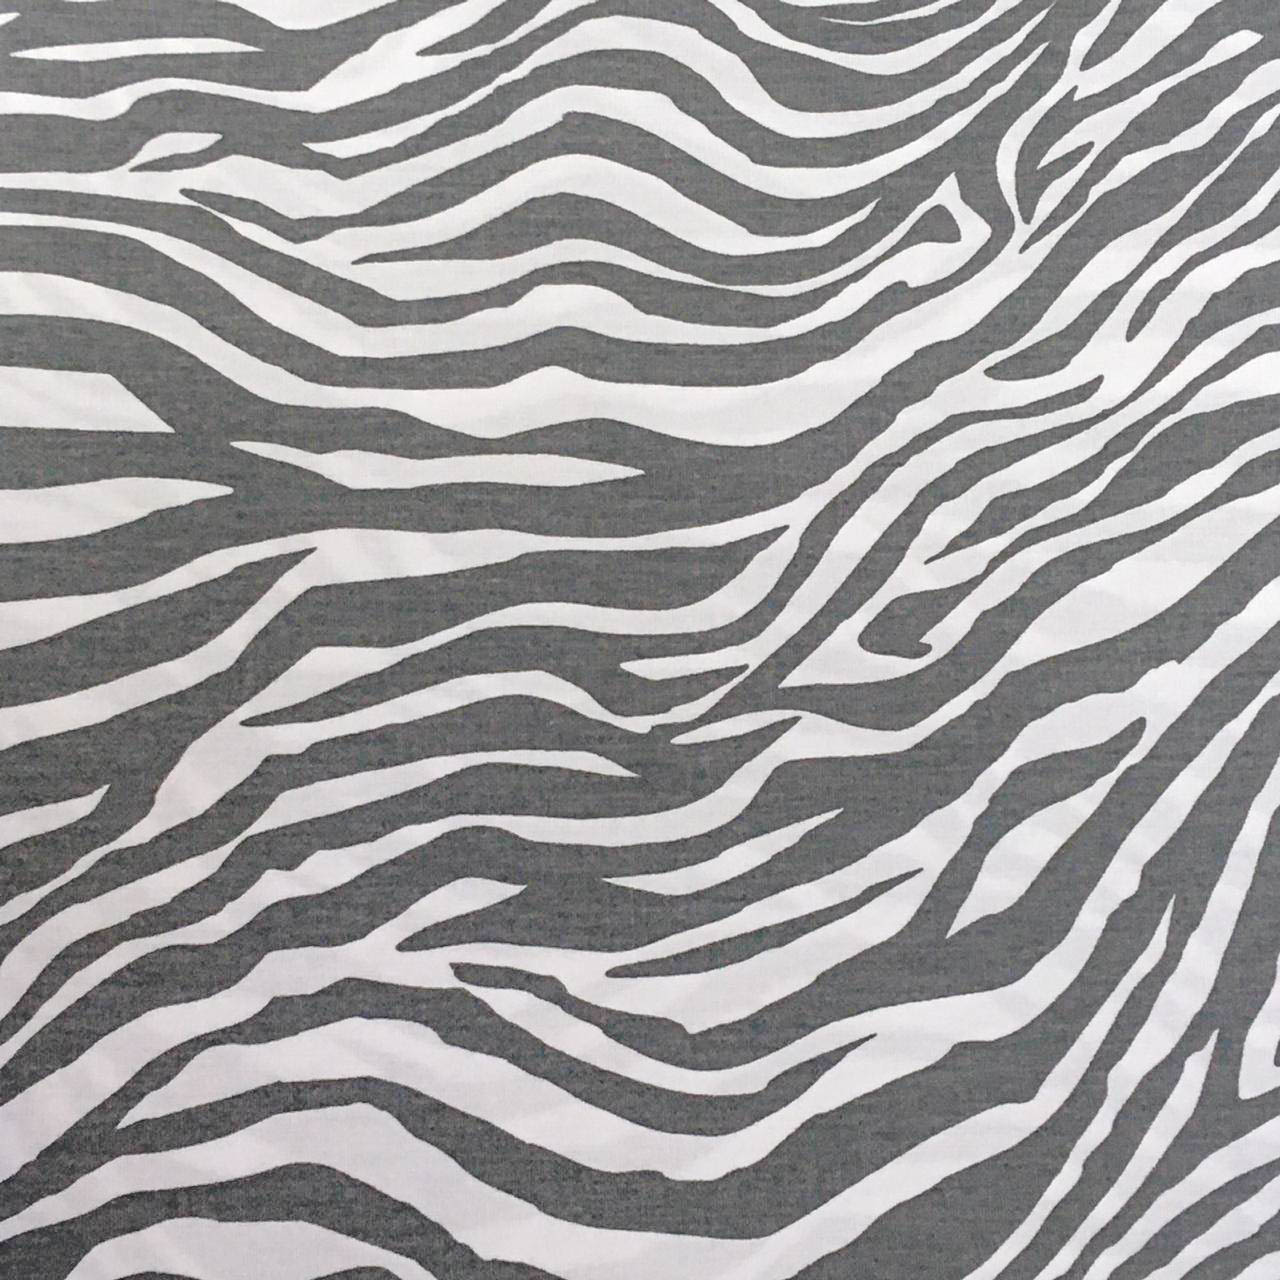 Tecido Animal Print Zebra Cinza com Branco